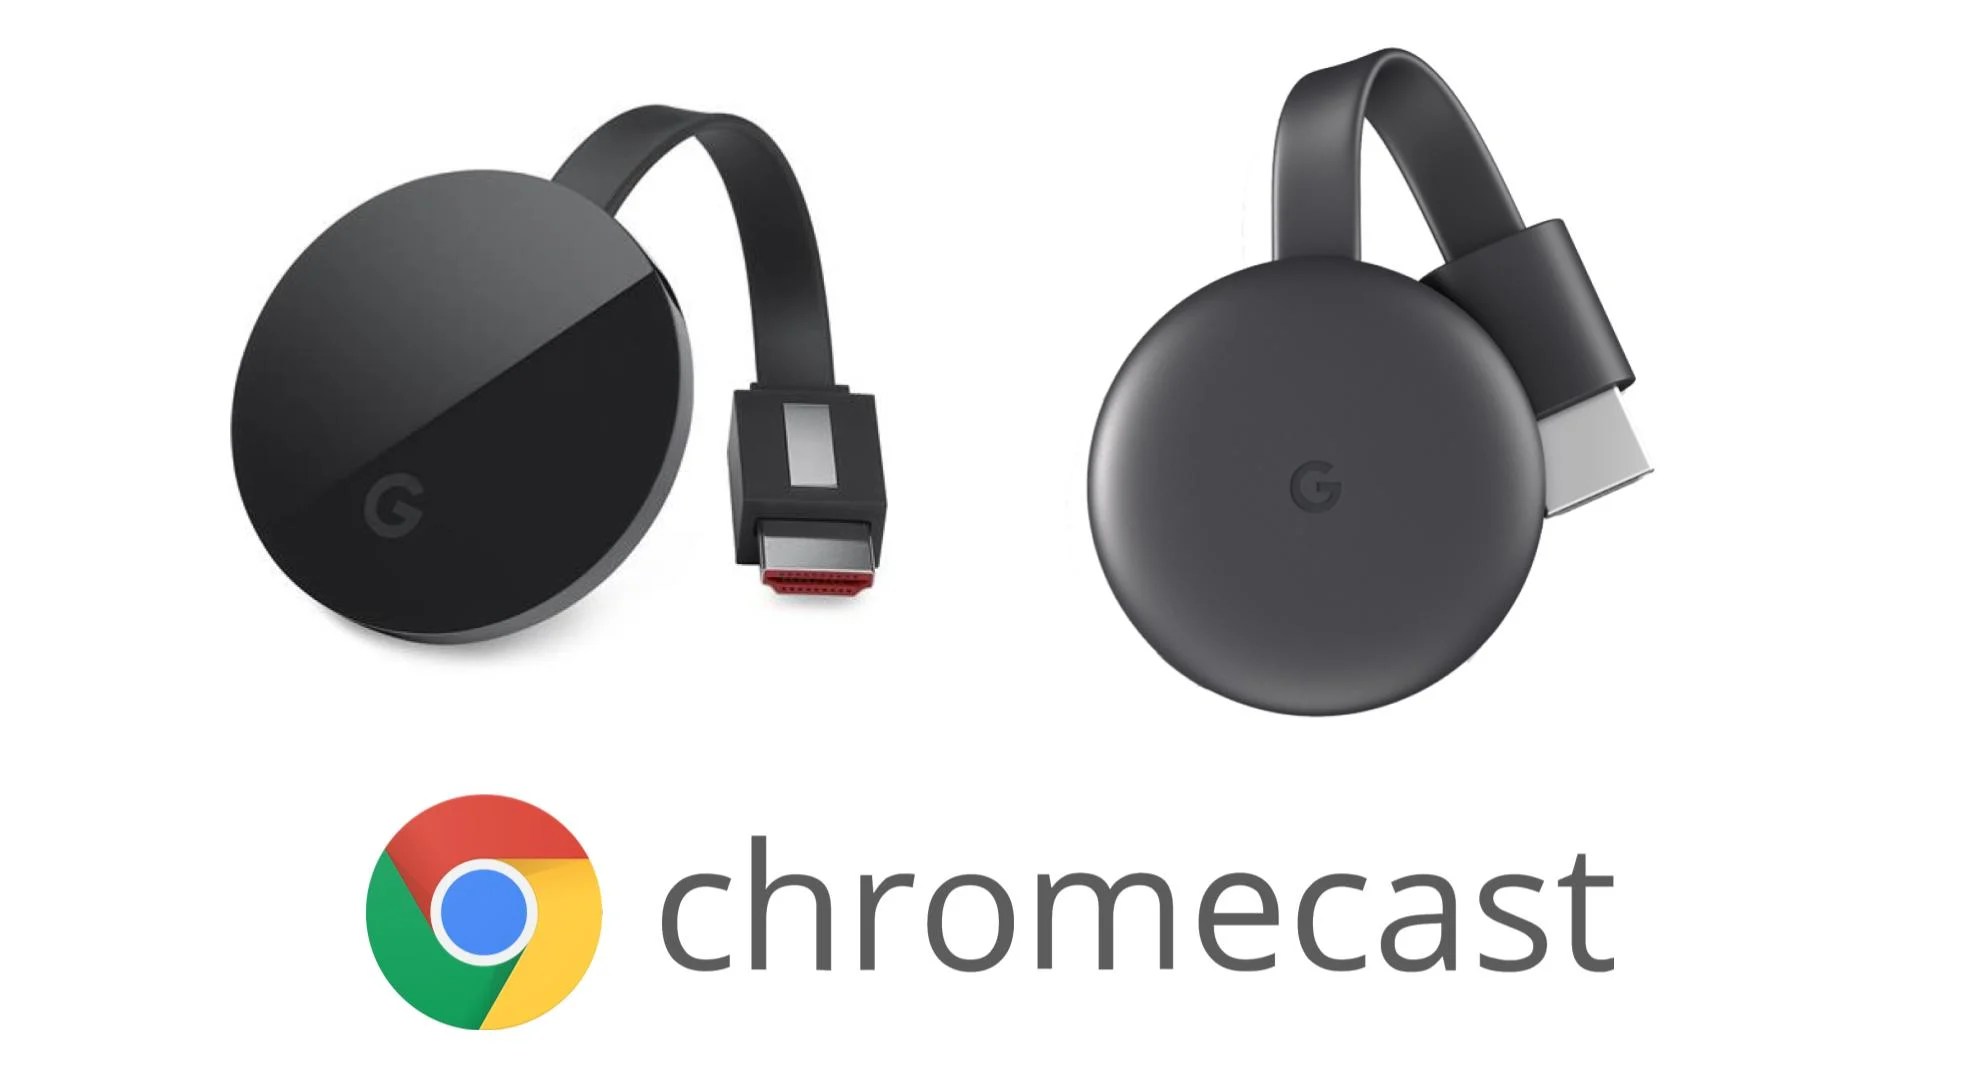 Google chromecast купить. Nike Training Club Chromecast. Мультимедийный плеер Chromecast. Google хромкаст. Google Chromecast 2022.